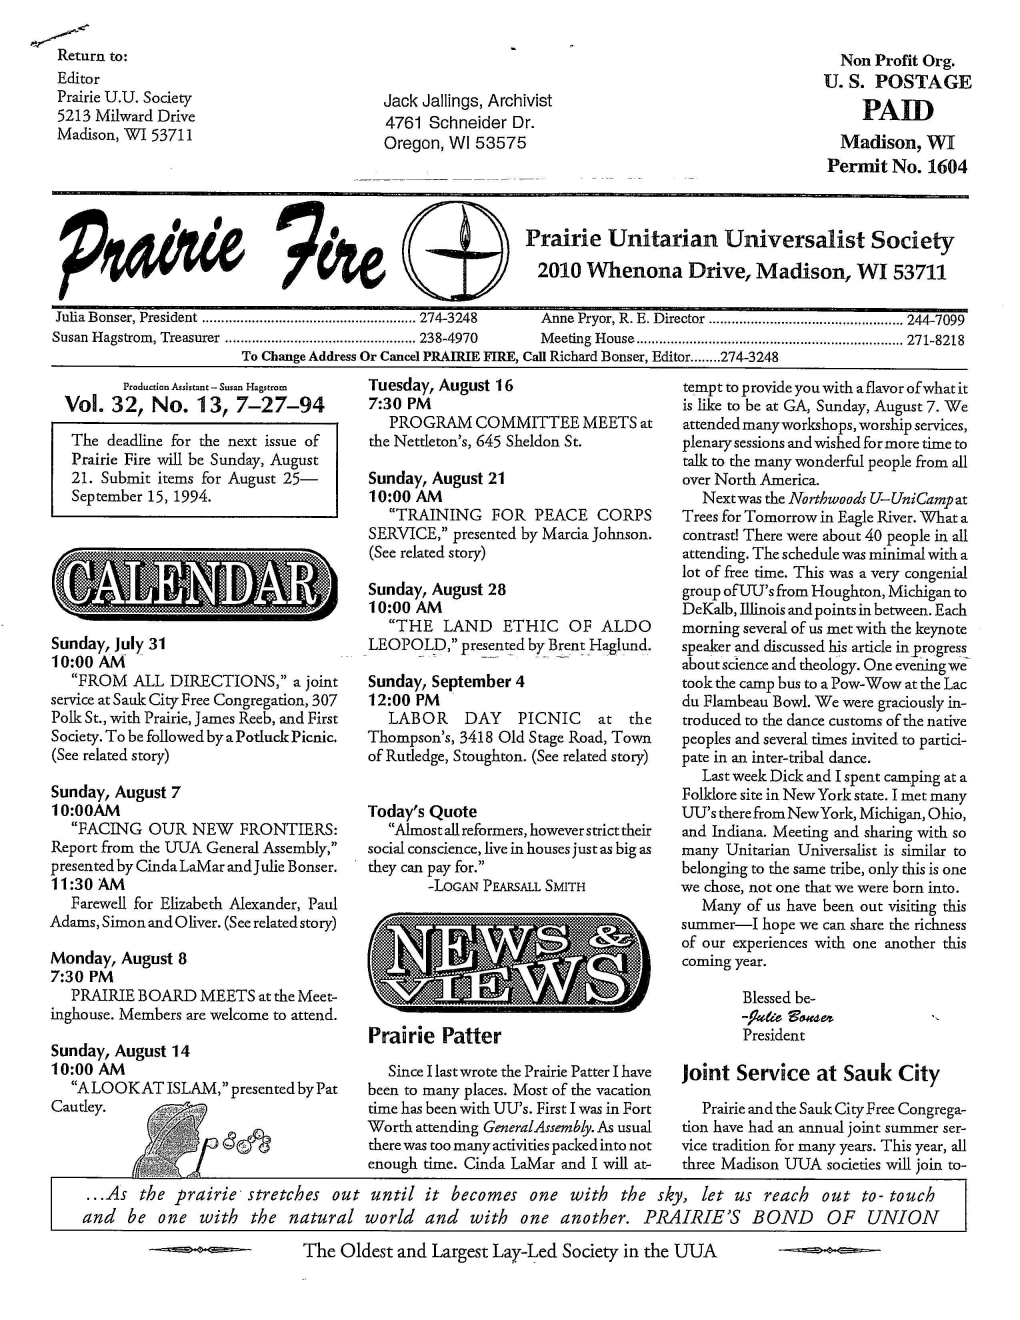 Prairie Unitarian Universalist Society 2010 Whenona Drive, Madison, WI 53711